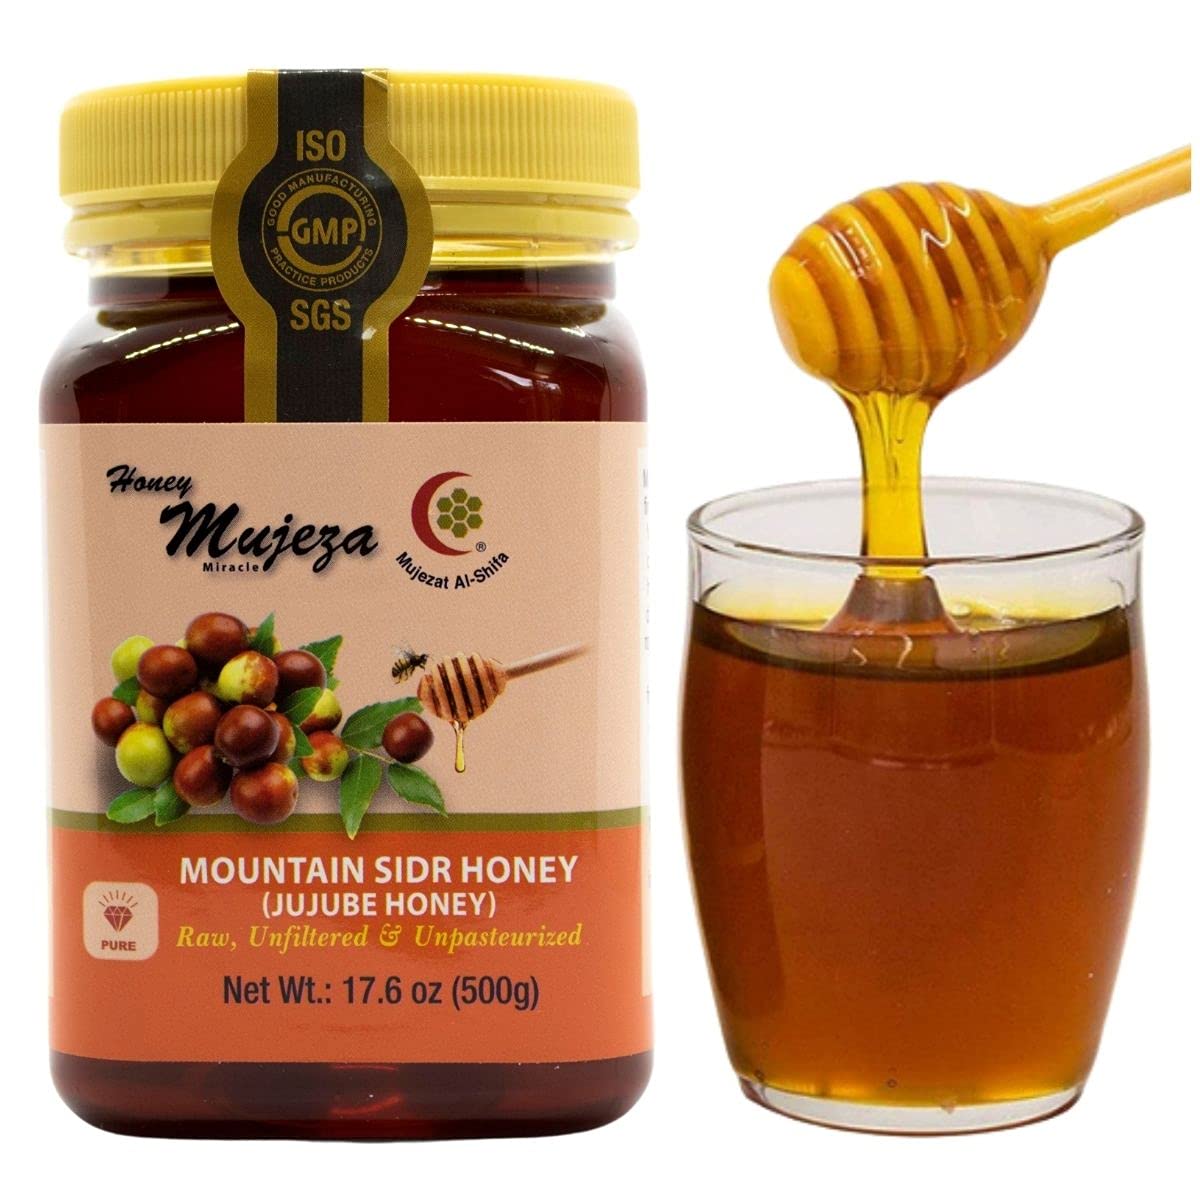 Mujeza Mountain Sidr Honey